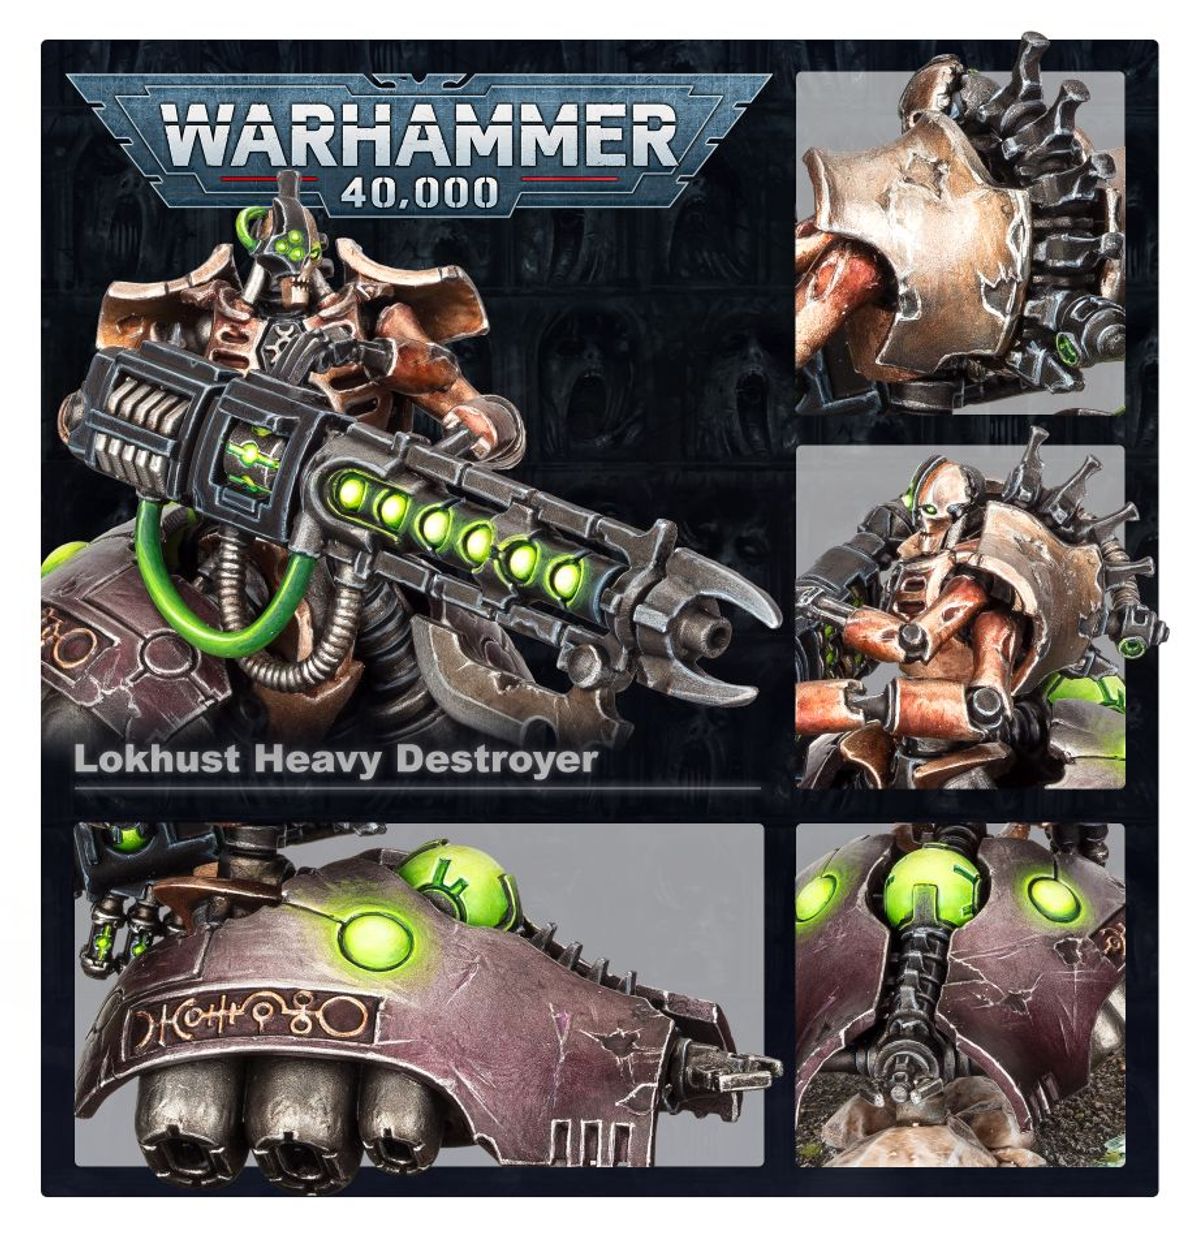 Warhammer 40k: Necrons - Lokhust Heavy Destroyer